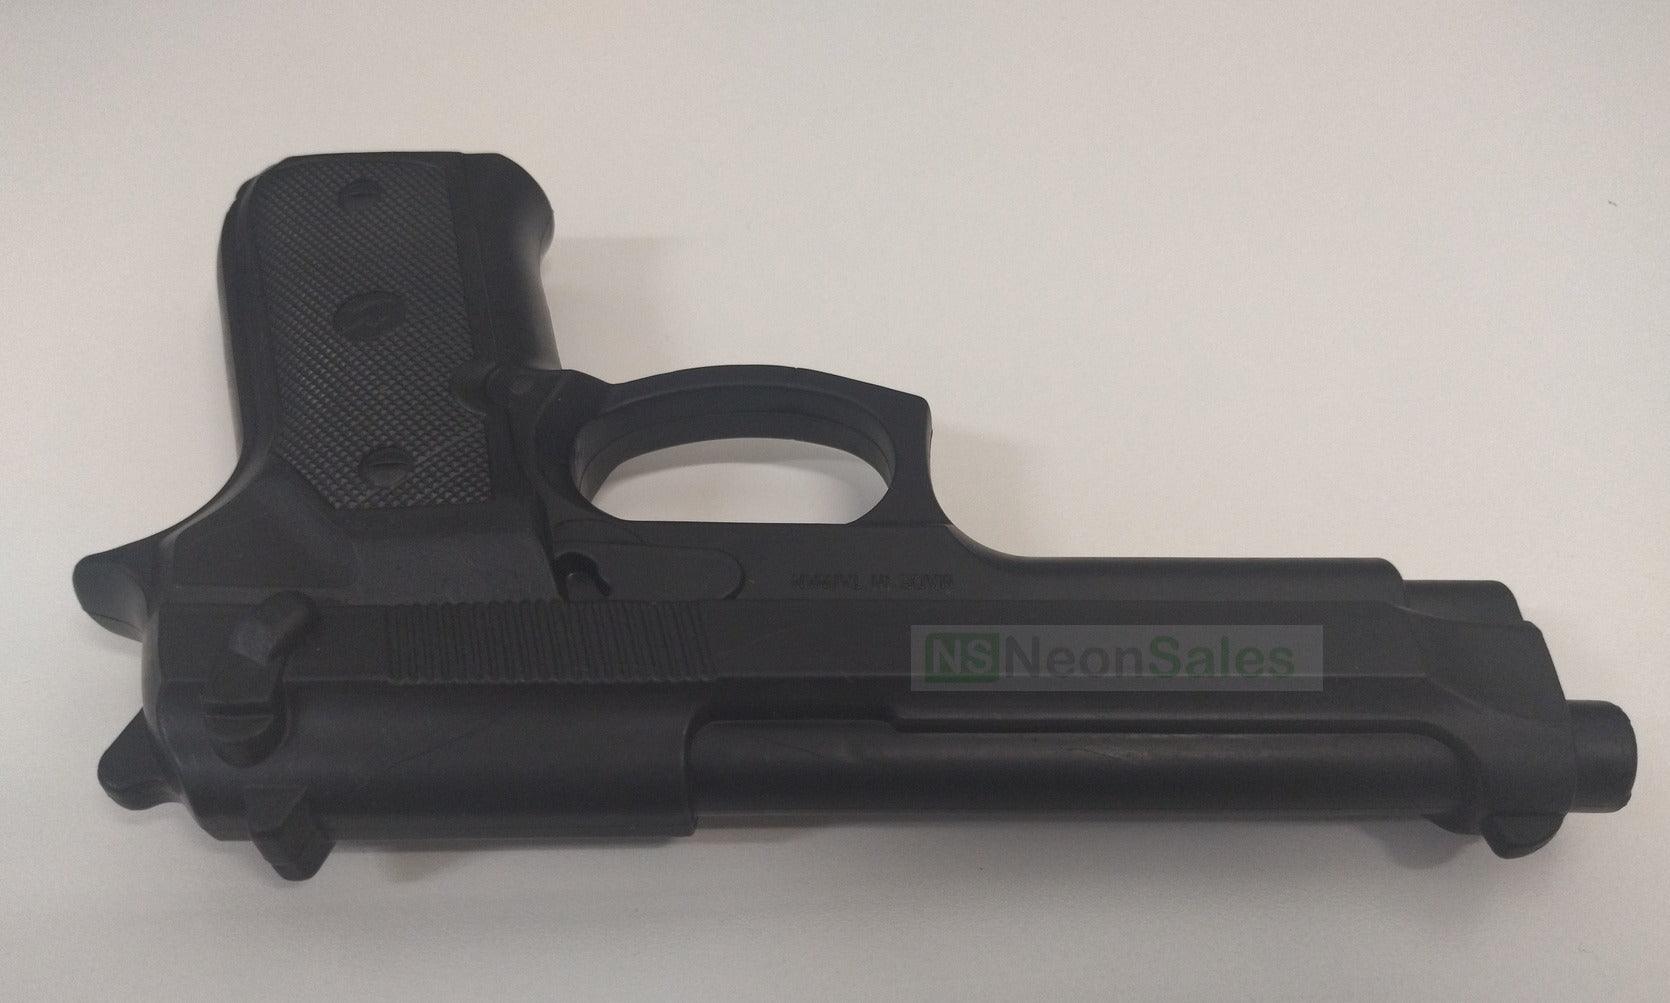 UNBRANDED BERRETA M92 TRAINING GUN - NeonSales